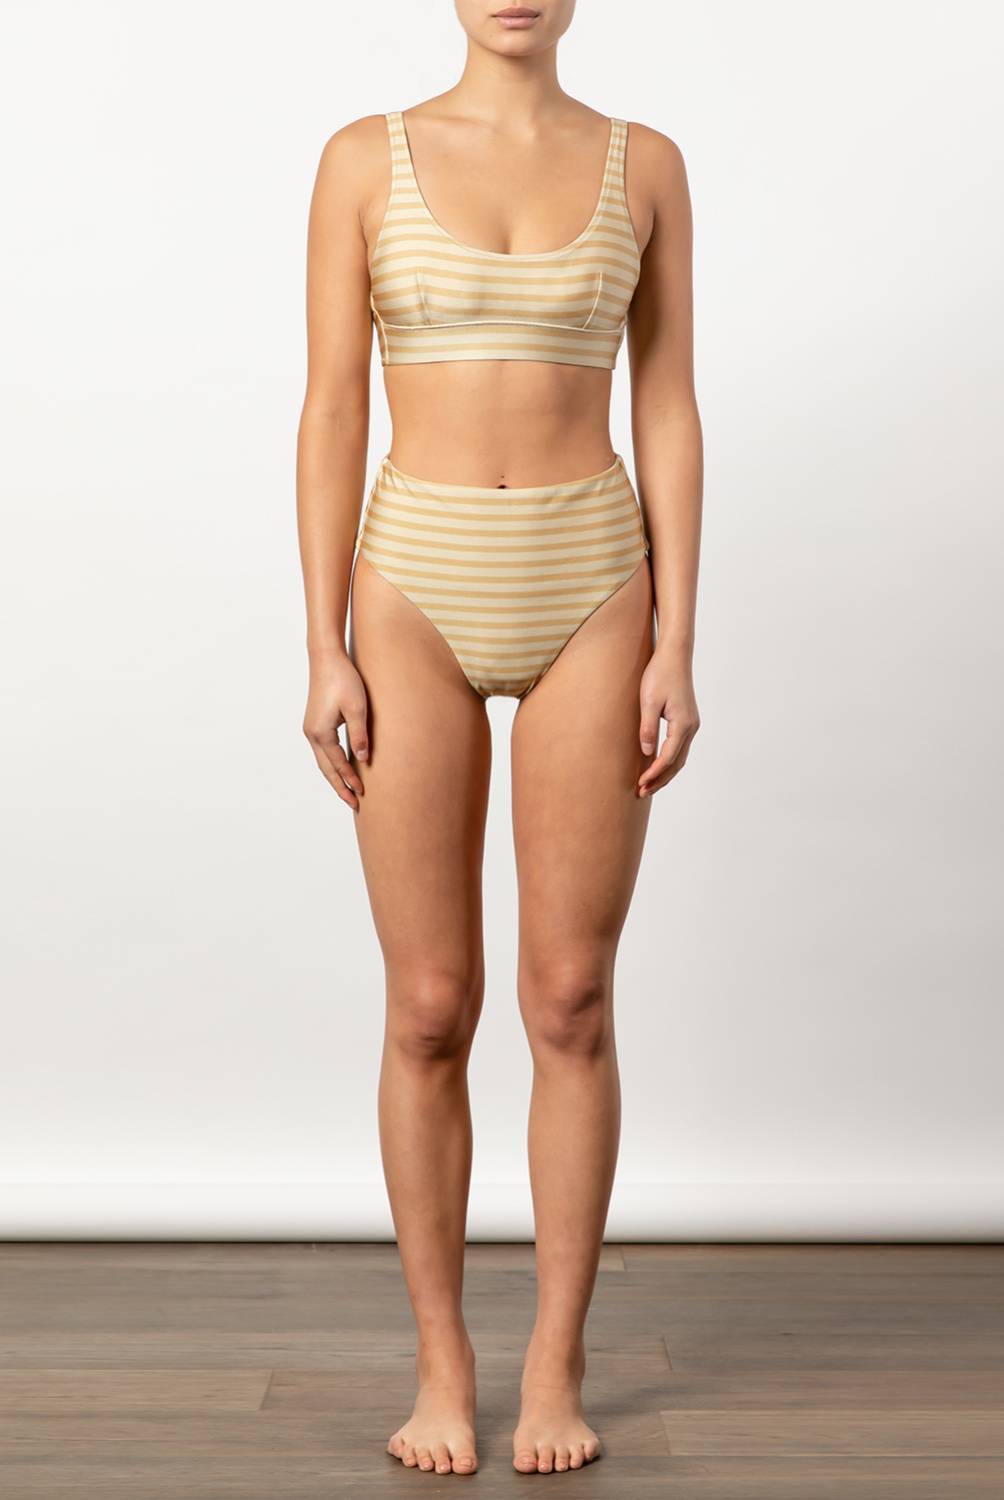 TIGERLILY - Tigerlily Bottom Bikini Mujer